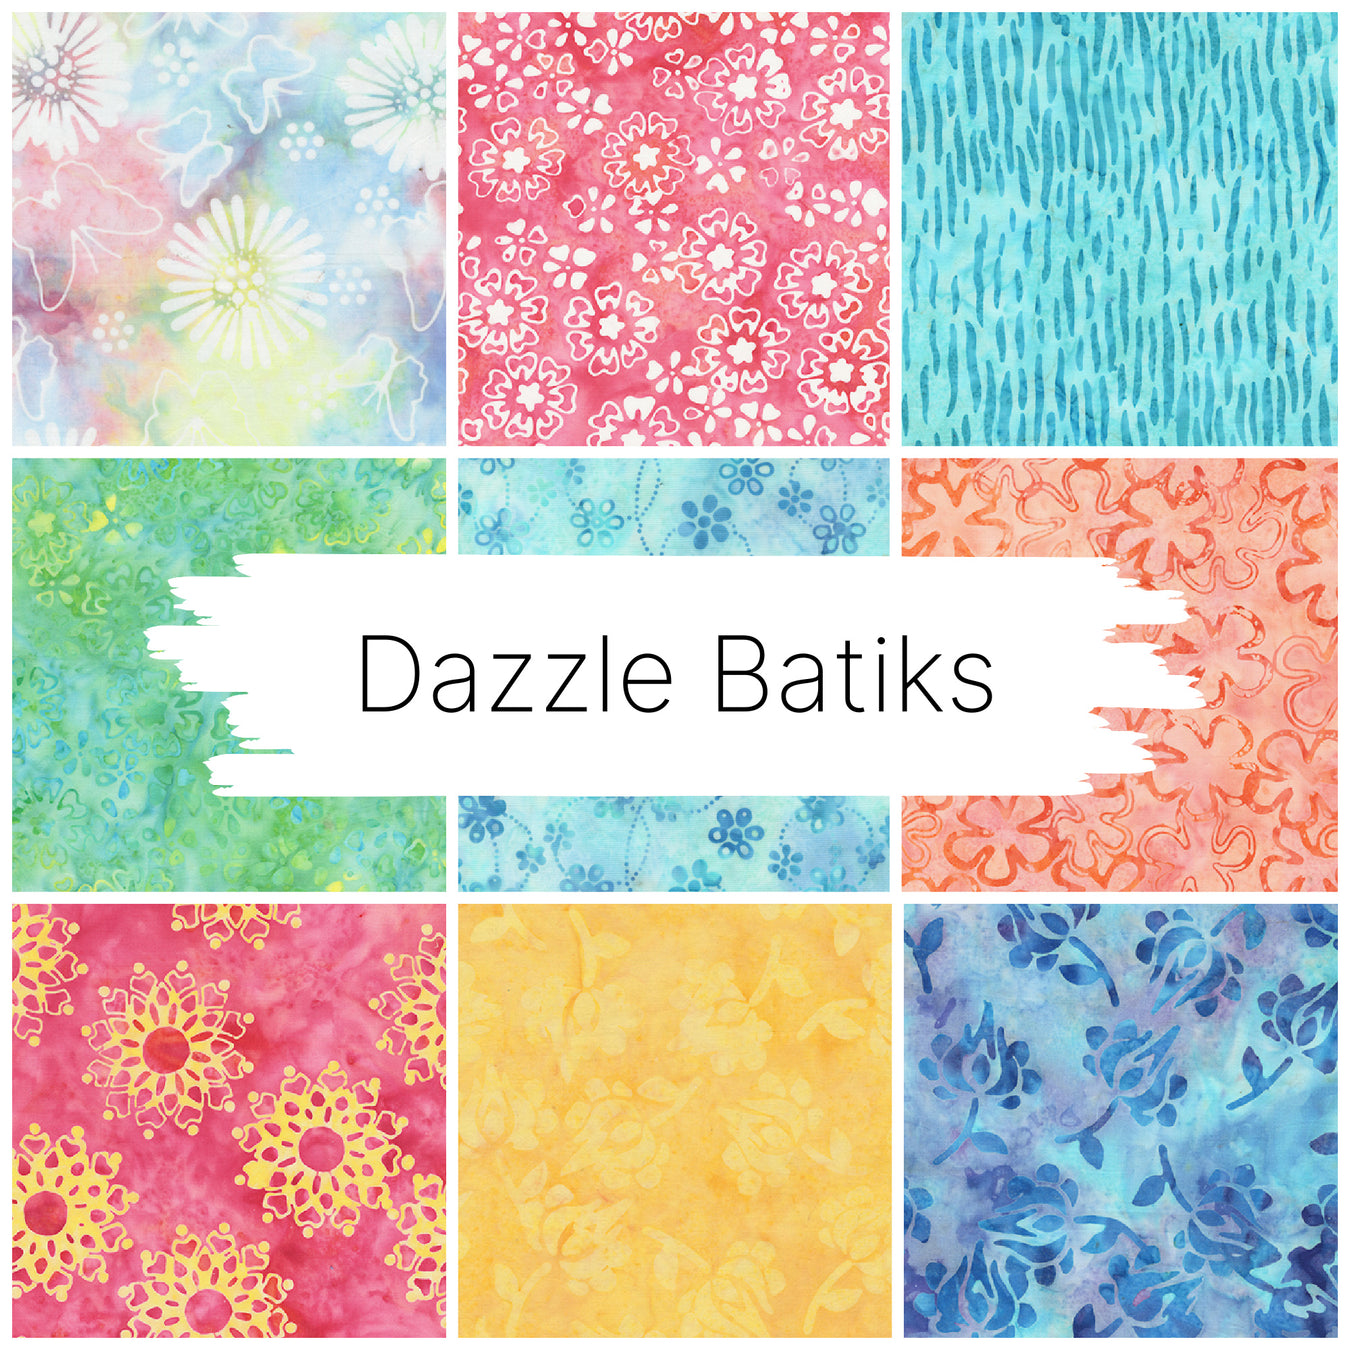 Dazzle Batiks